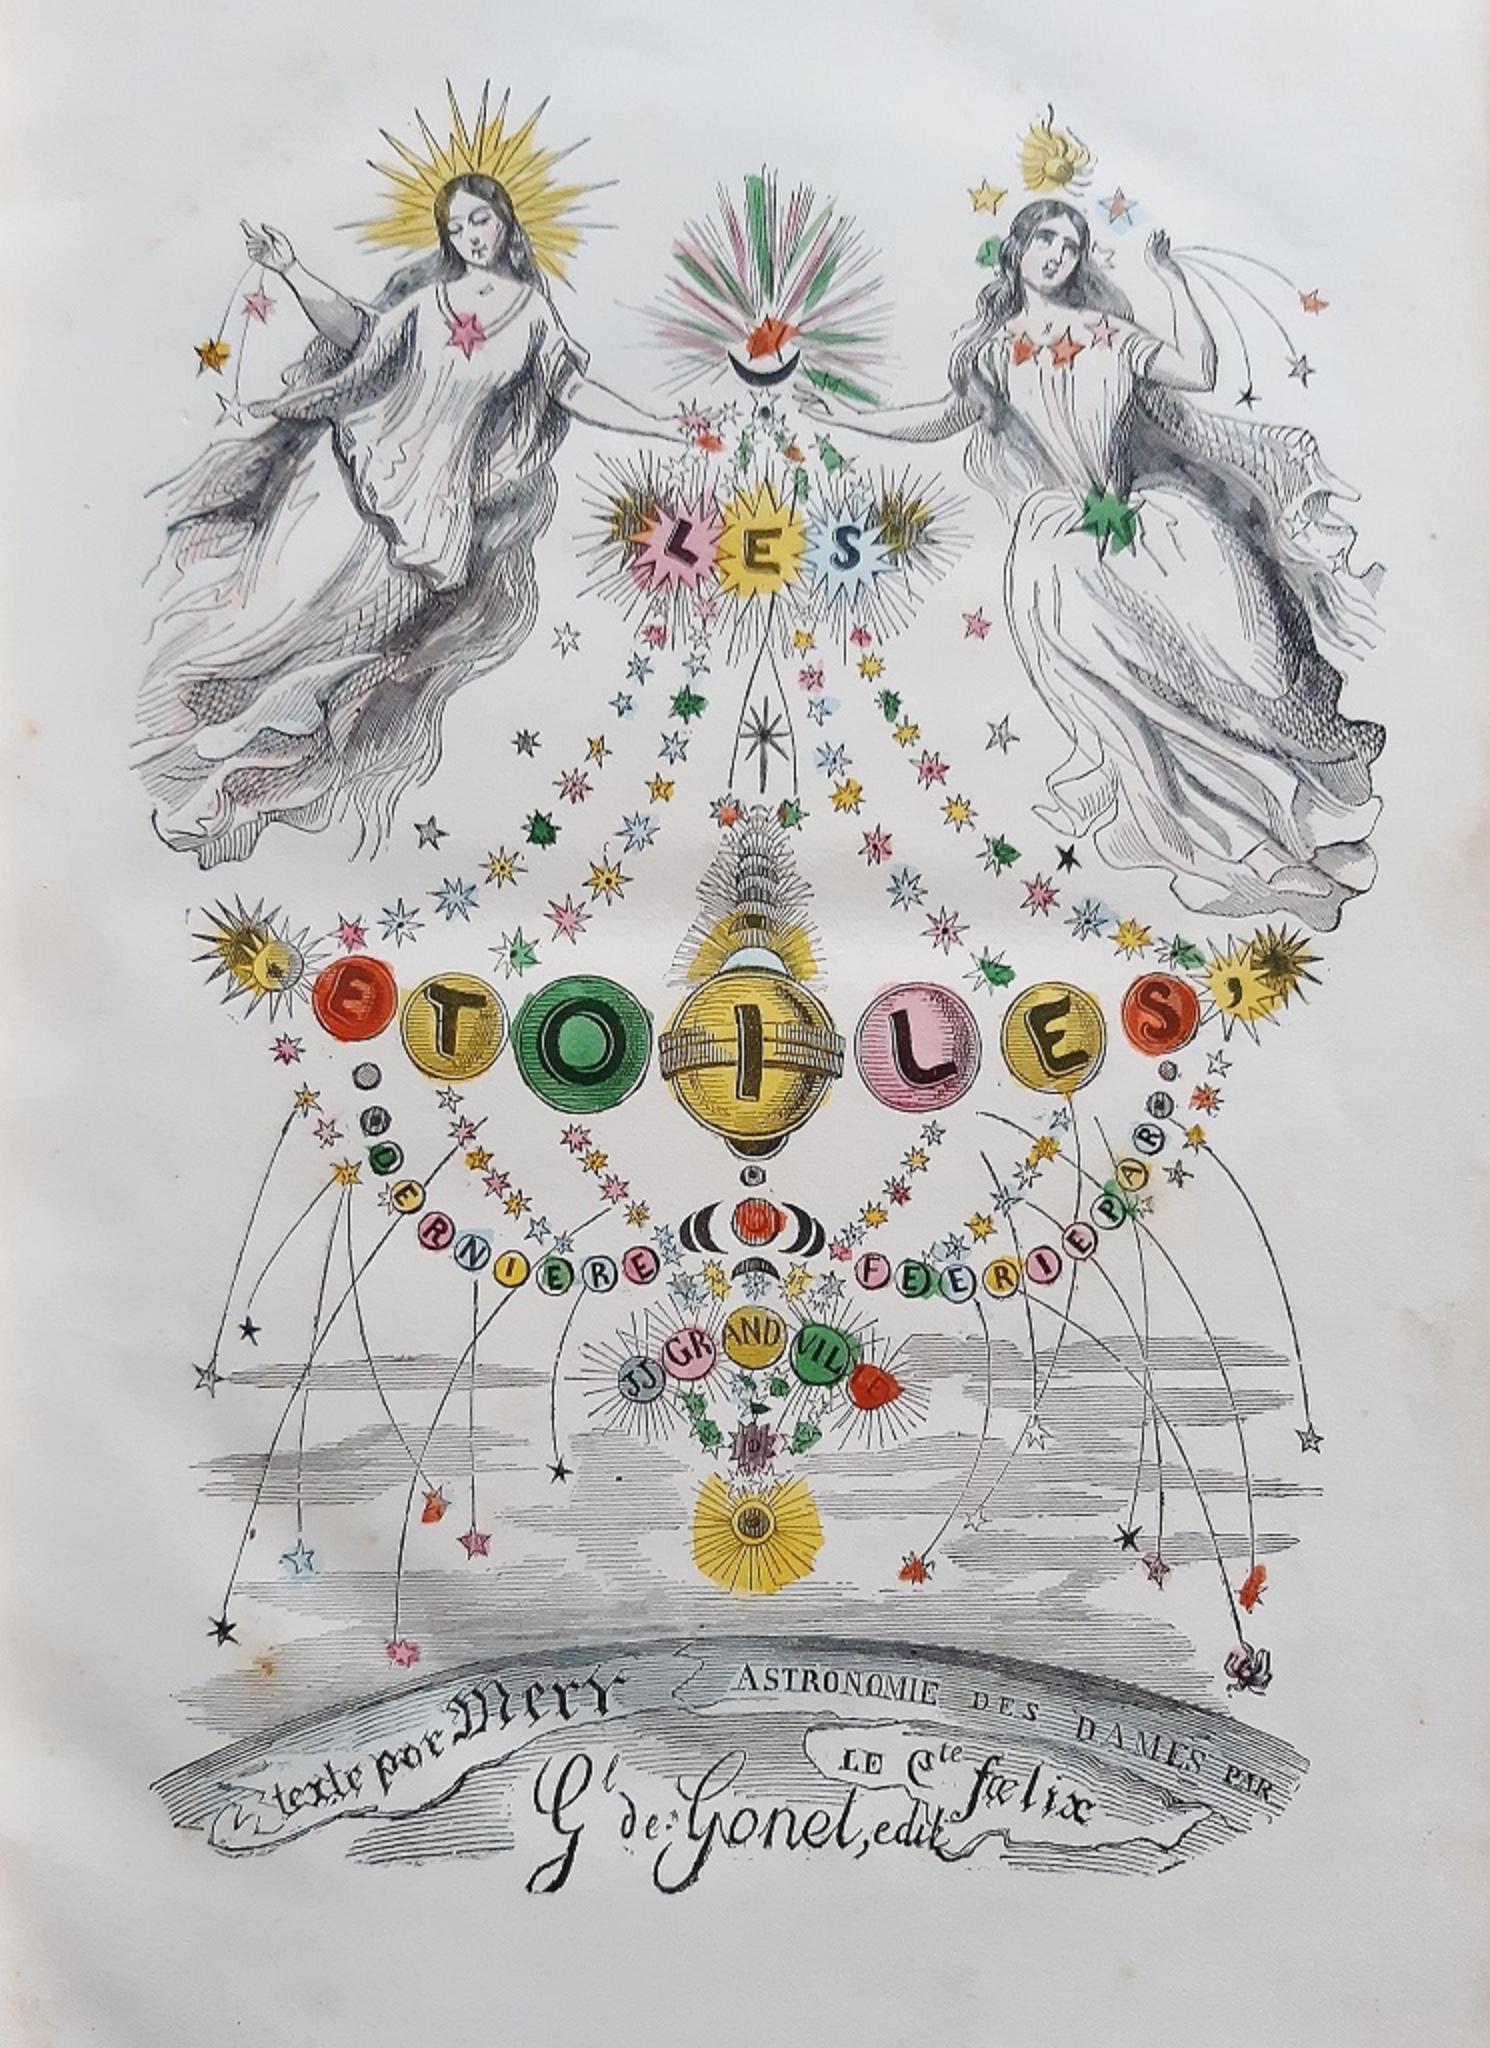 Les Etoiles (suivi de l’Astronomie des Dames) is an original modern rare book written by Joseph Méry and Le Comte Foelix and illustrated by Jean Jeacques Grandville  (Nancy, 1803 – Vanves, 1847) in 1849.

Original First Edition.

Published by De